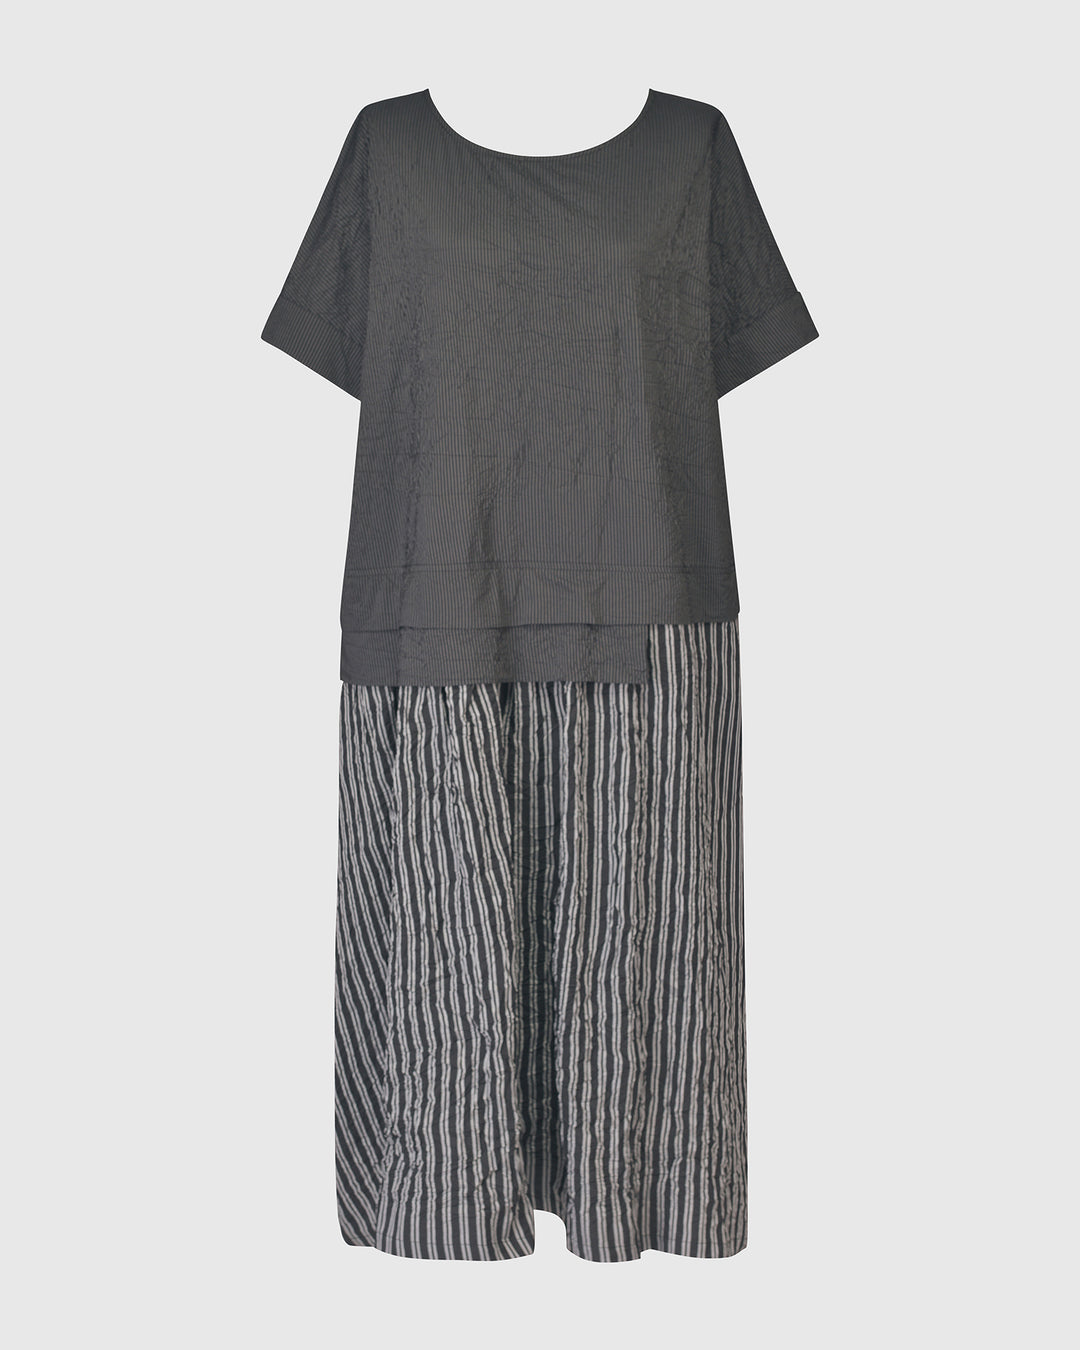 Urban Pinstripe Crinkle Maxi Dress, Silver/black